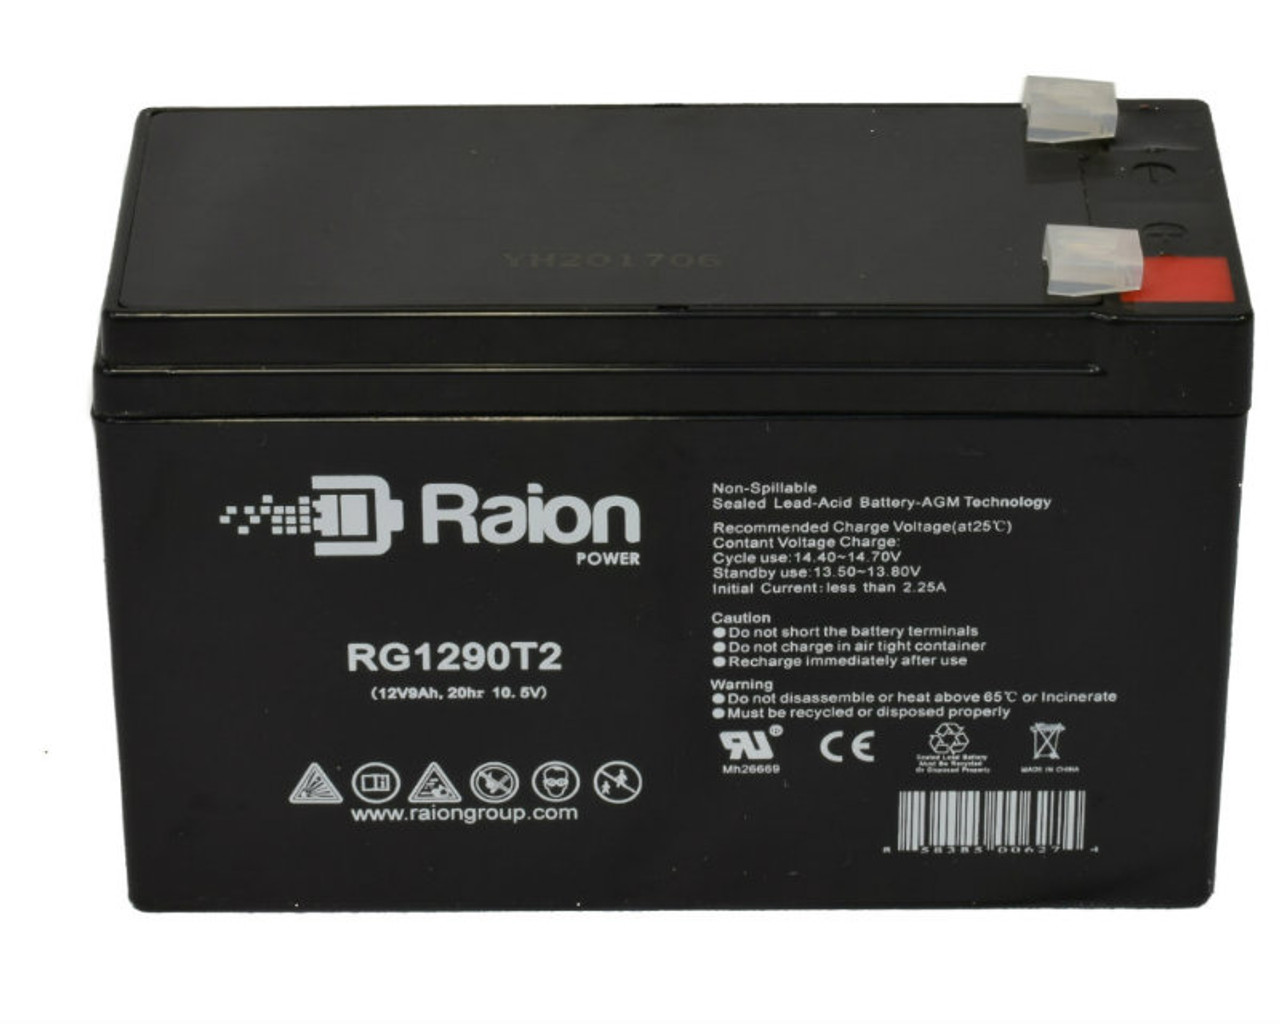 Raion Power RG1290T2 12V 9Ah Lead Acid Battery for Upsonic CS 1500